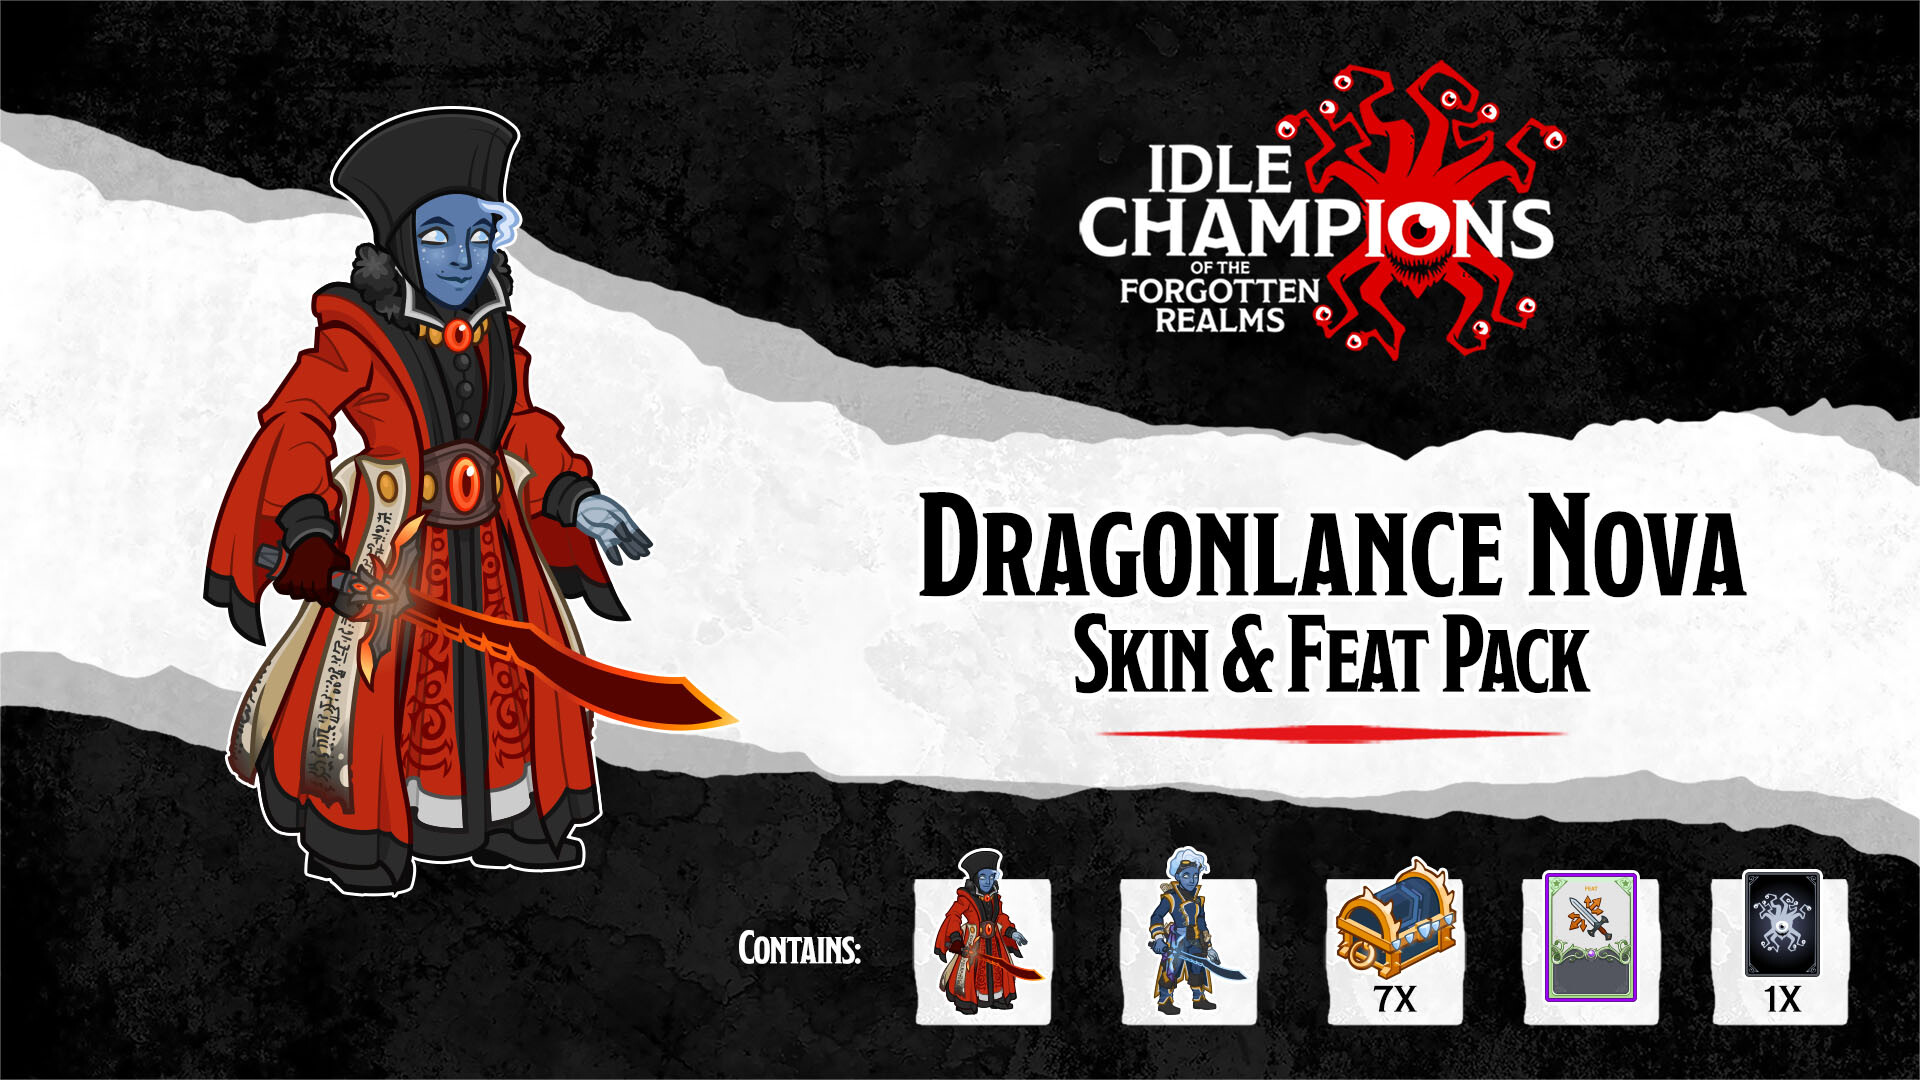 Idle Champions - Dragonlance Nova Skin & Feat Pack Featured Screenshot #1